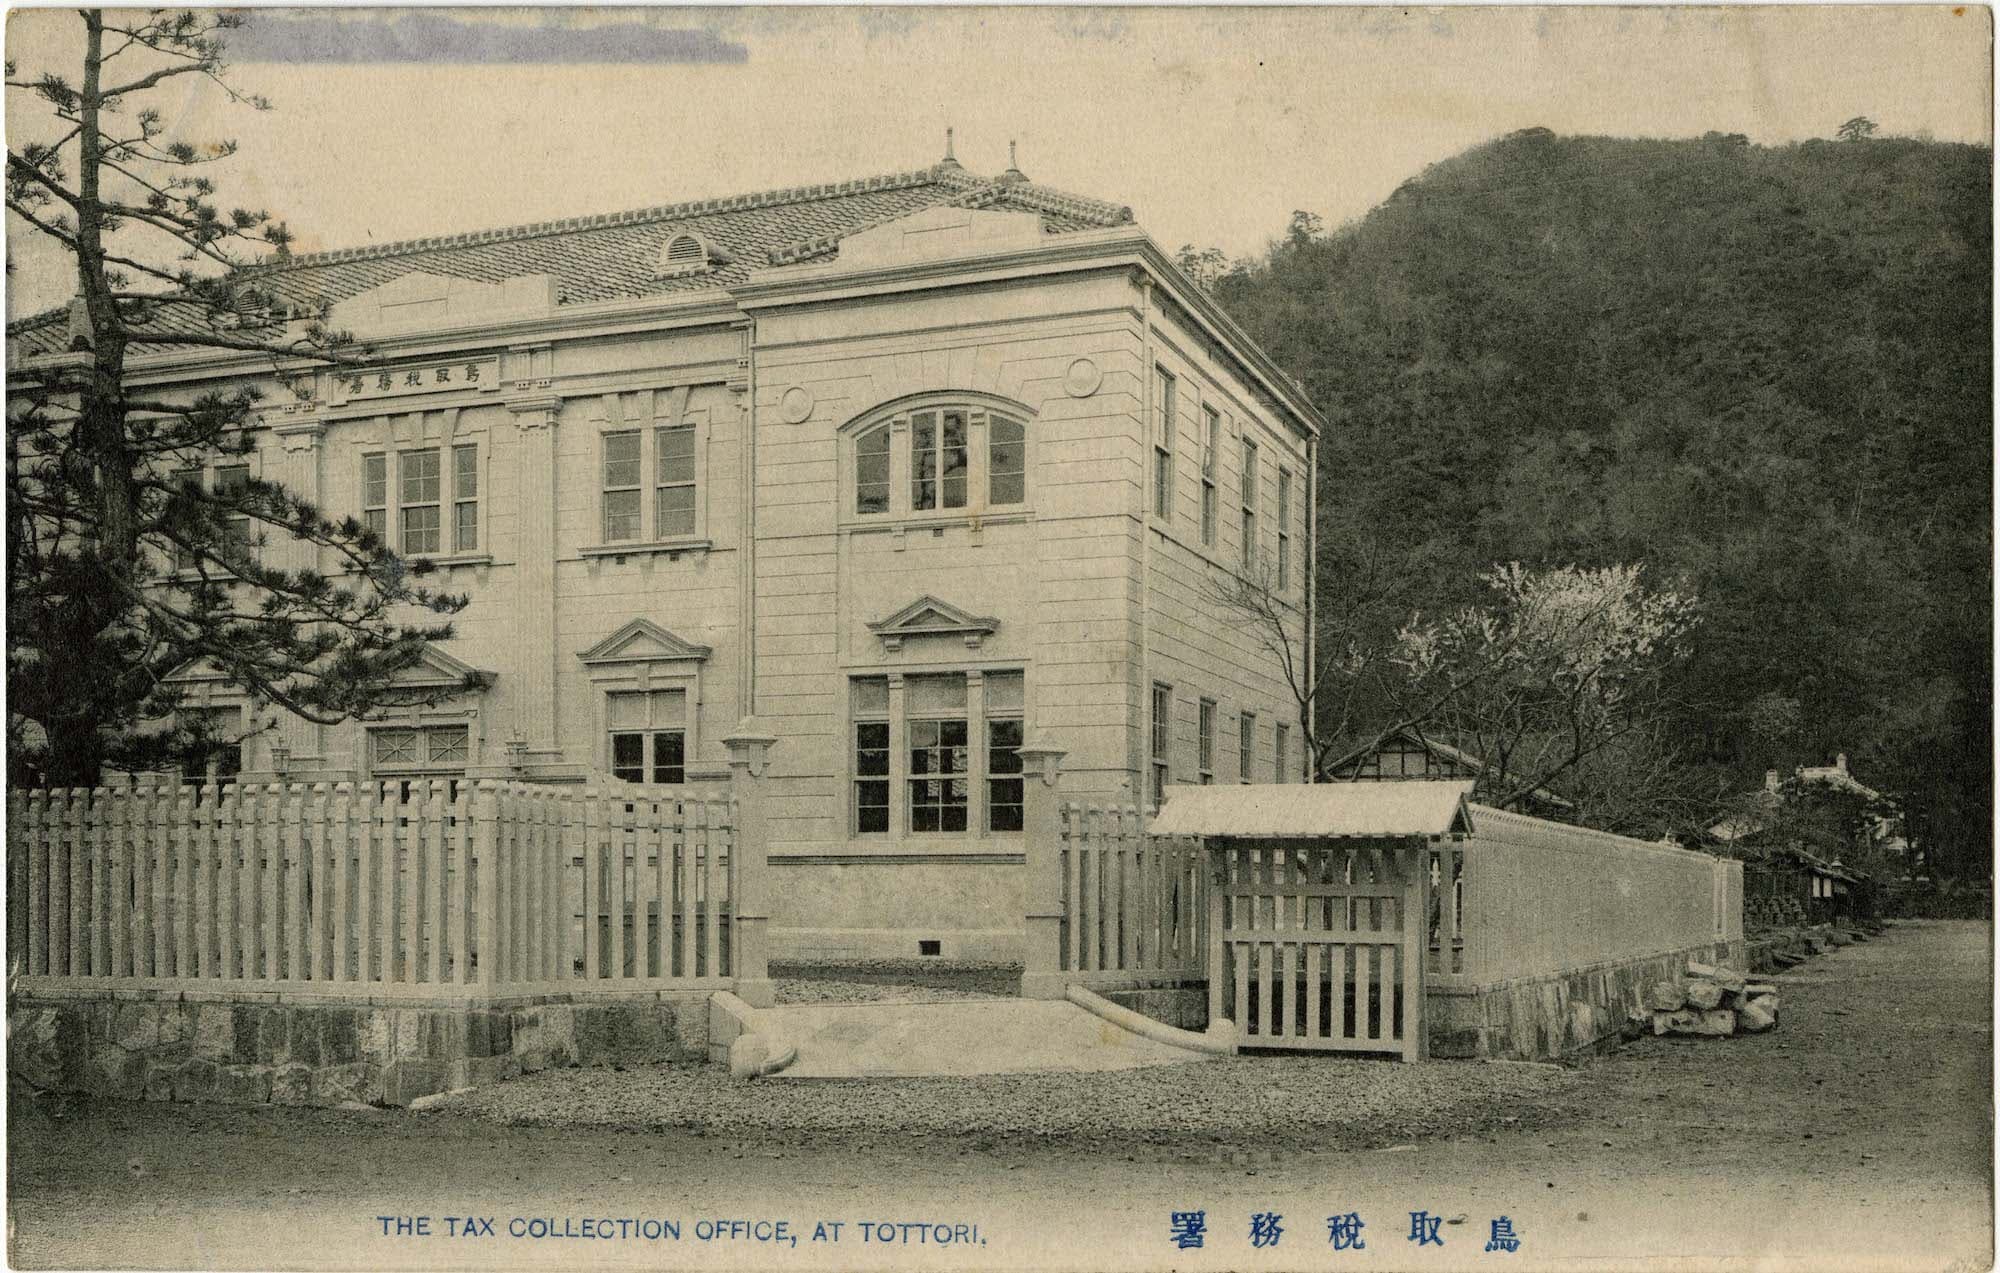 鳥取税務署's image 1